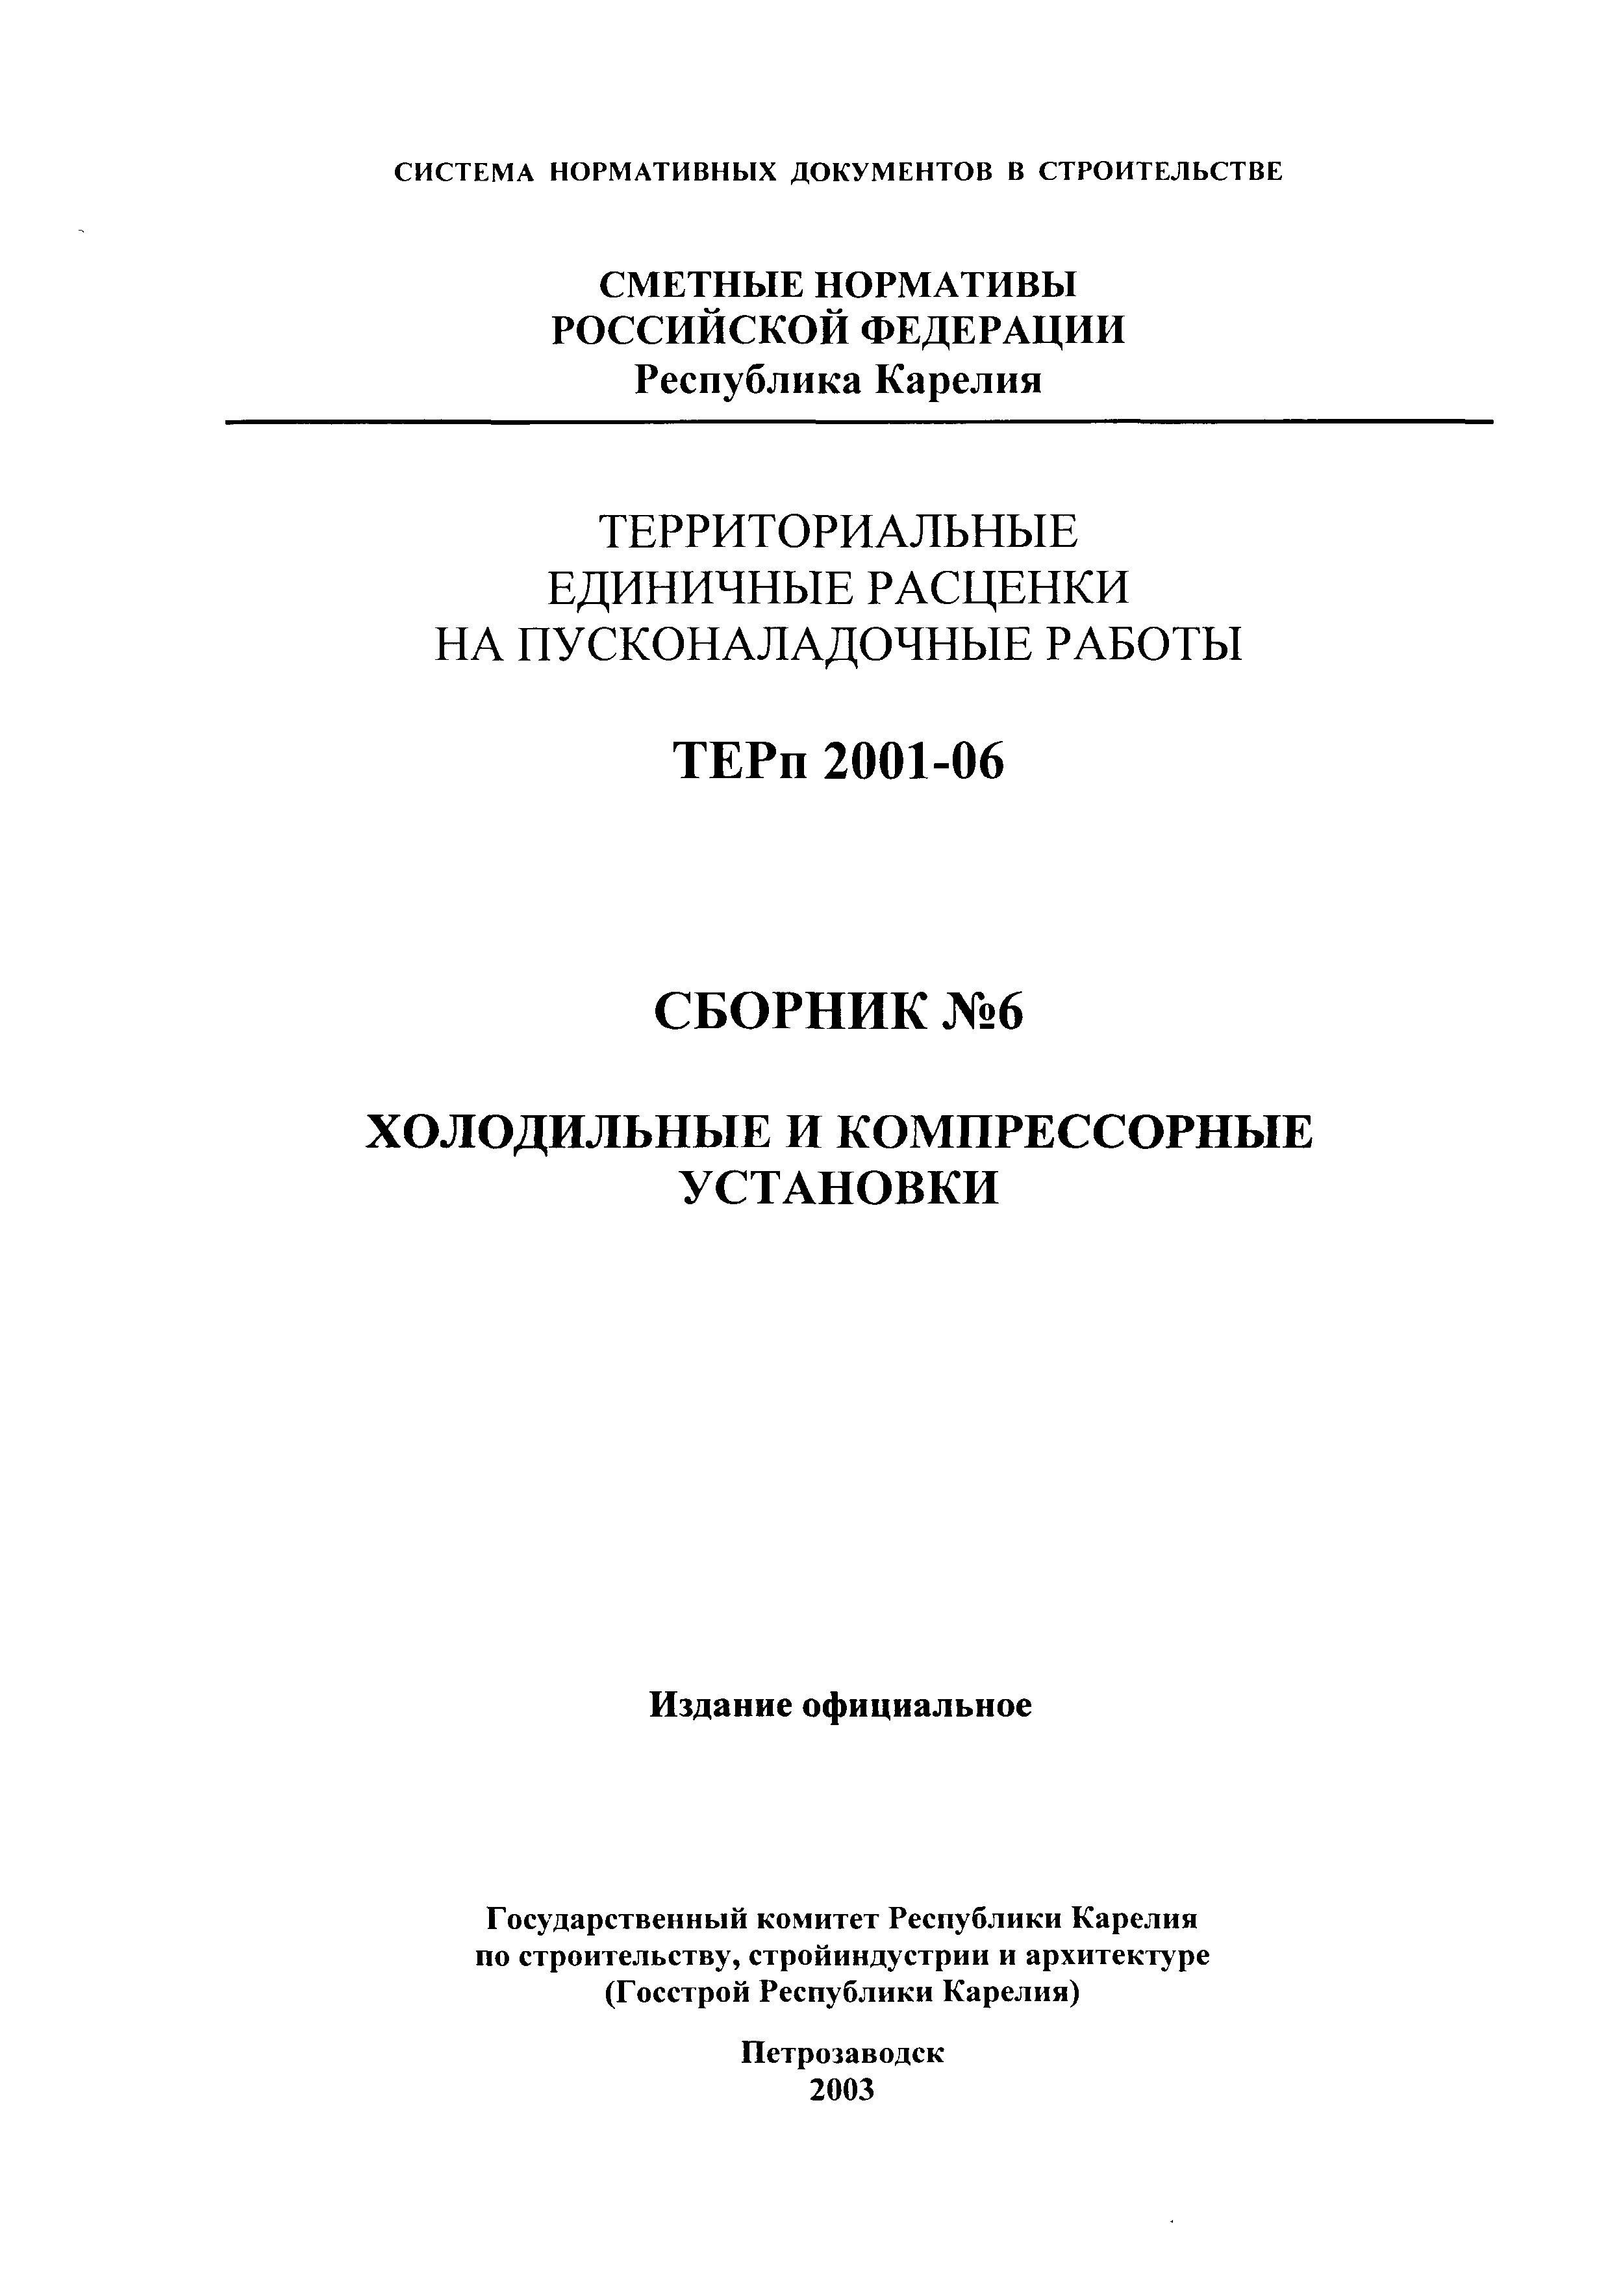 ТЕРп Республика Карелия 2001-06